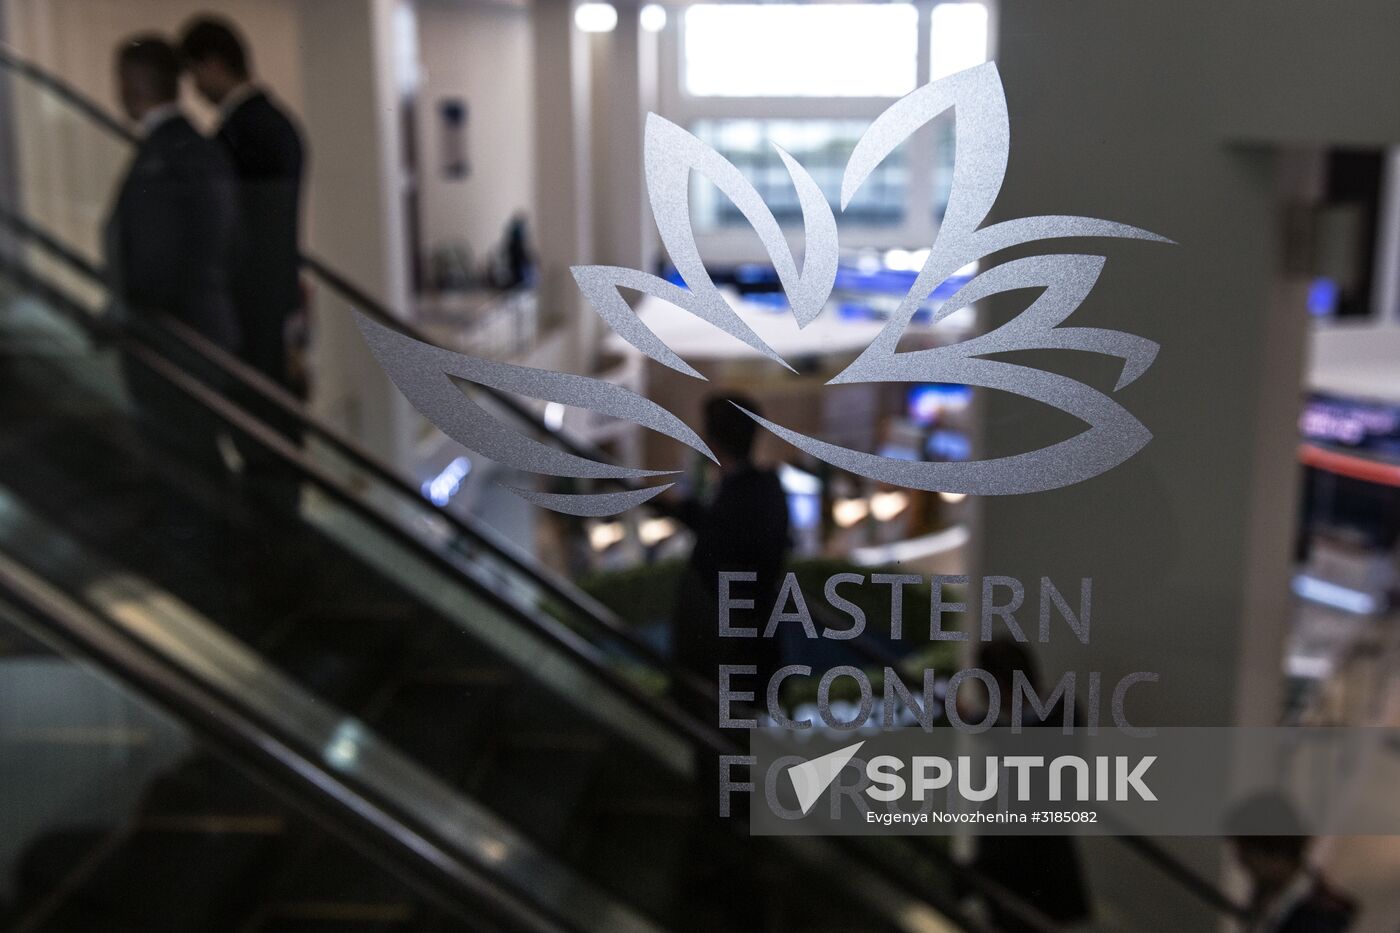 Preparing to open the Eastern Economic Forum